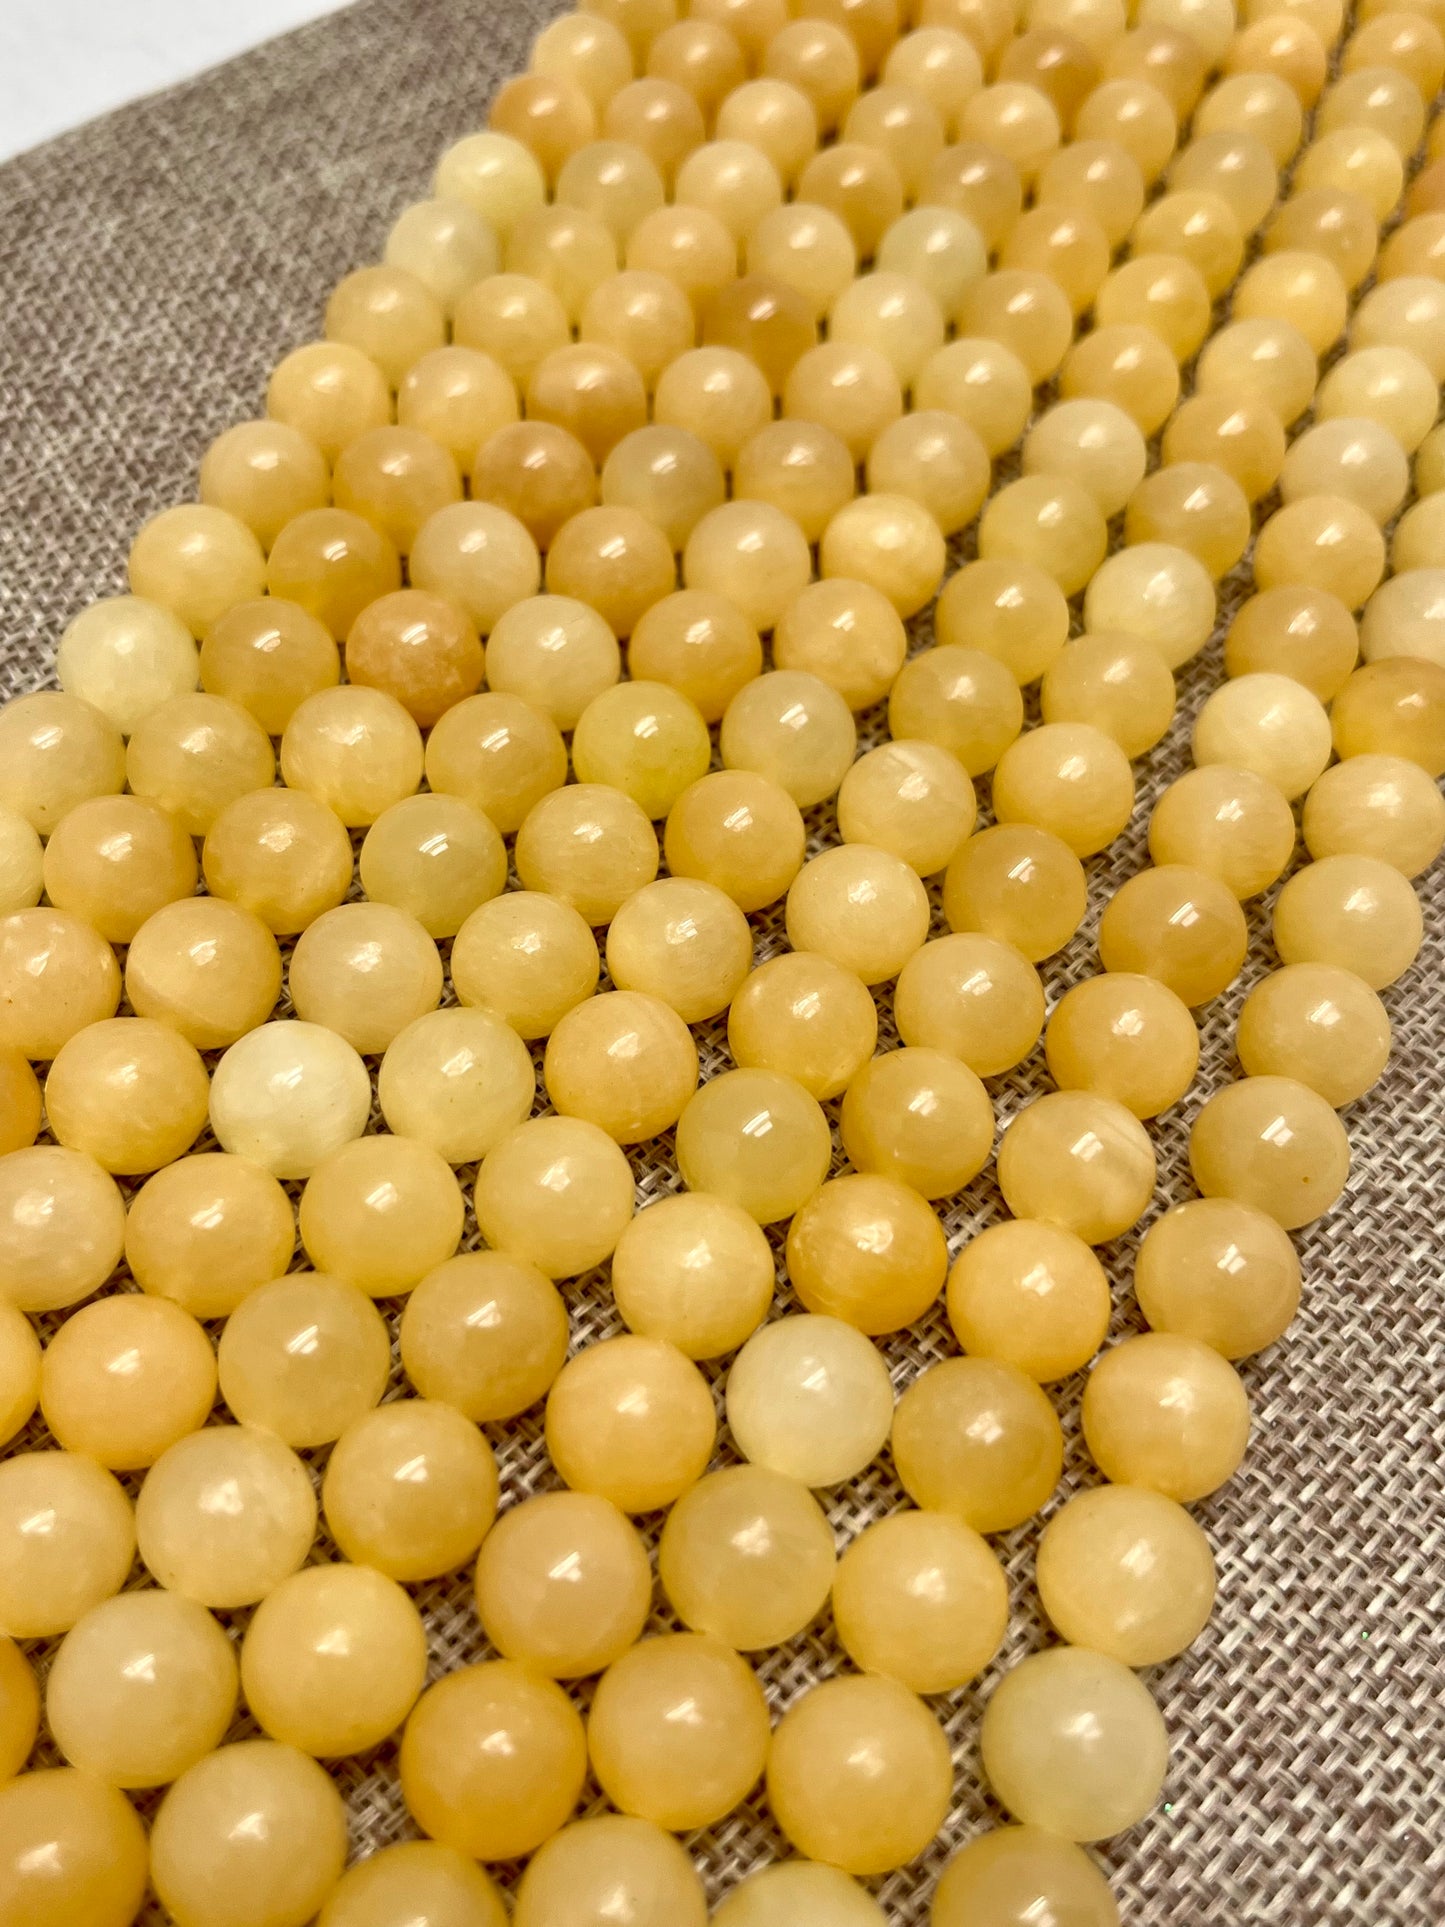 Yellow Jade Round Bead - Full Strand - Approx. 16” Long